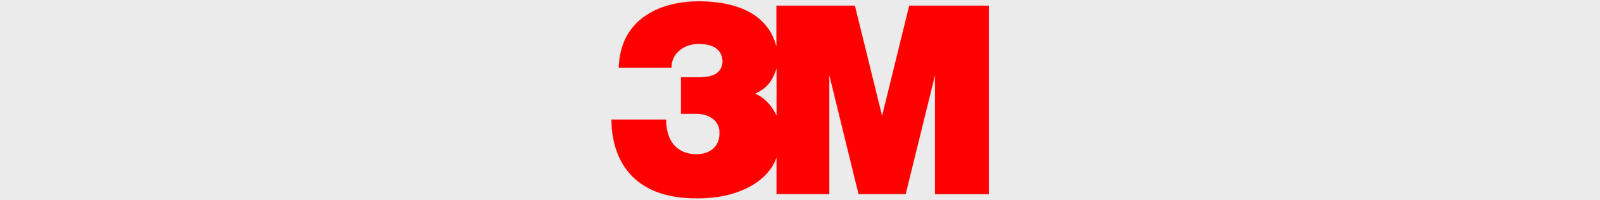 3m logo banner